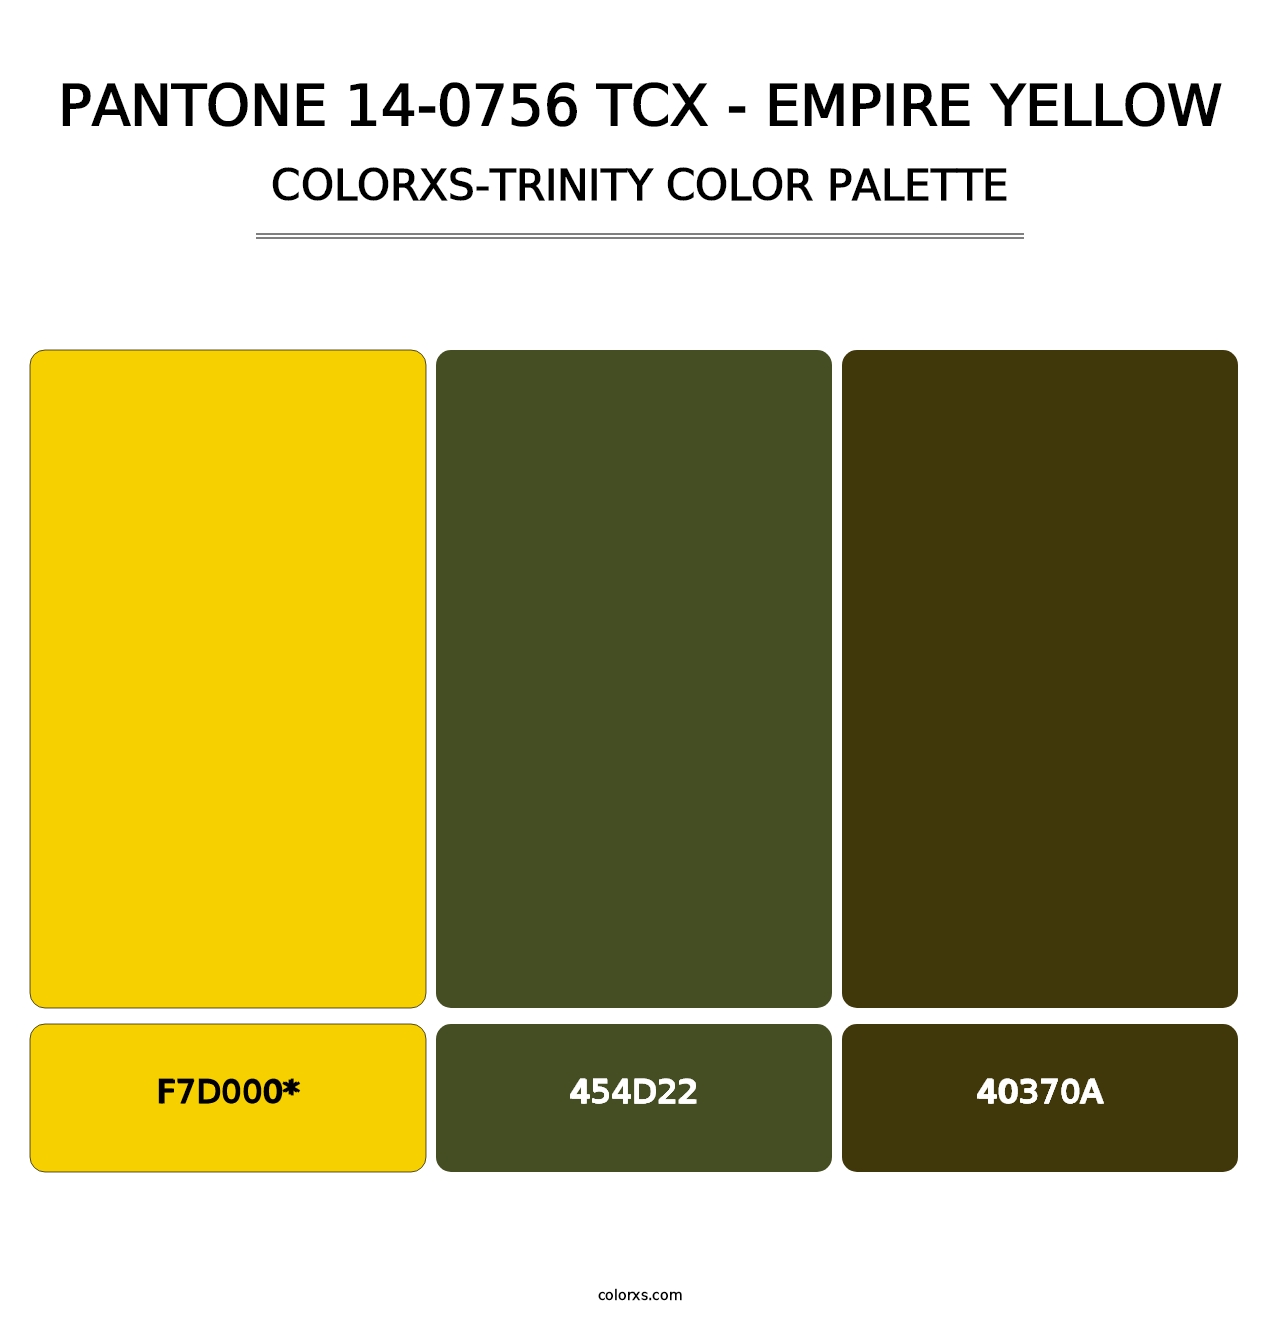 PANTONE 14-0756 TCX - Empire Yellow - Colorxs Trinity Palette